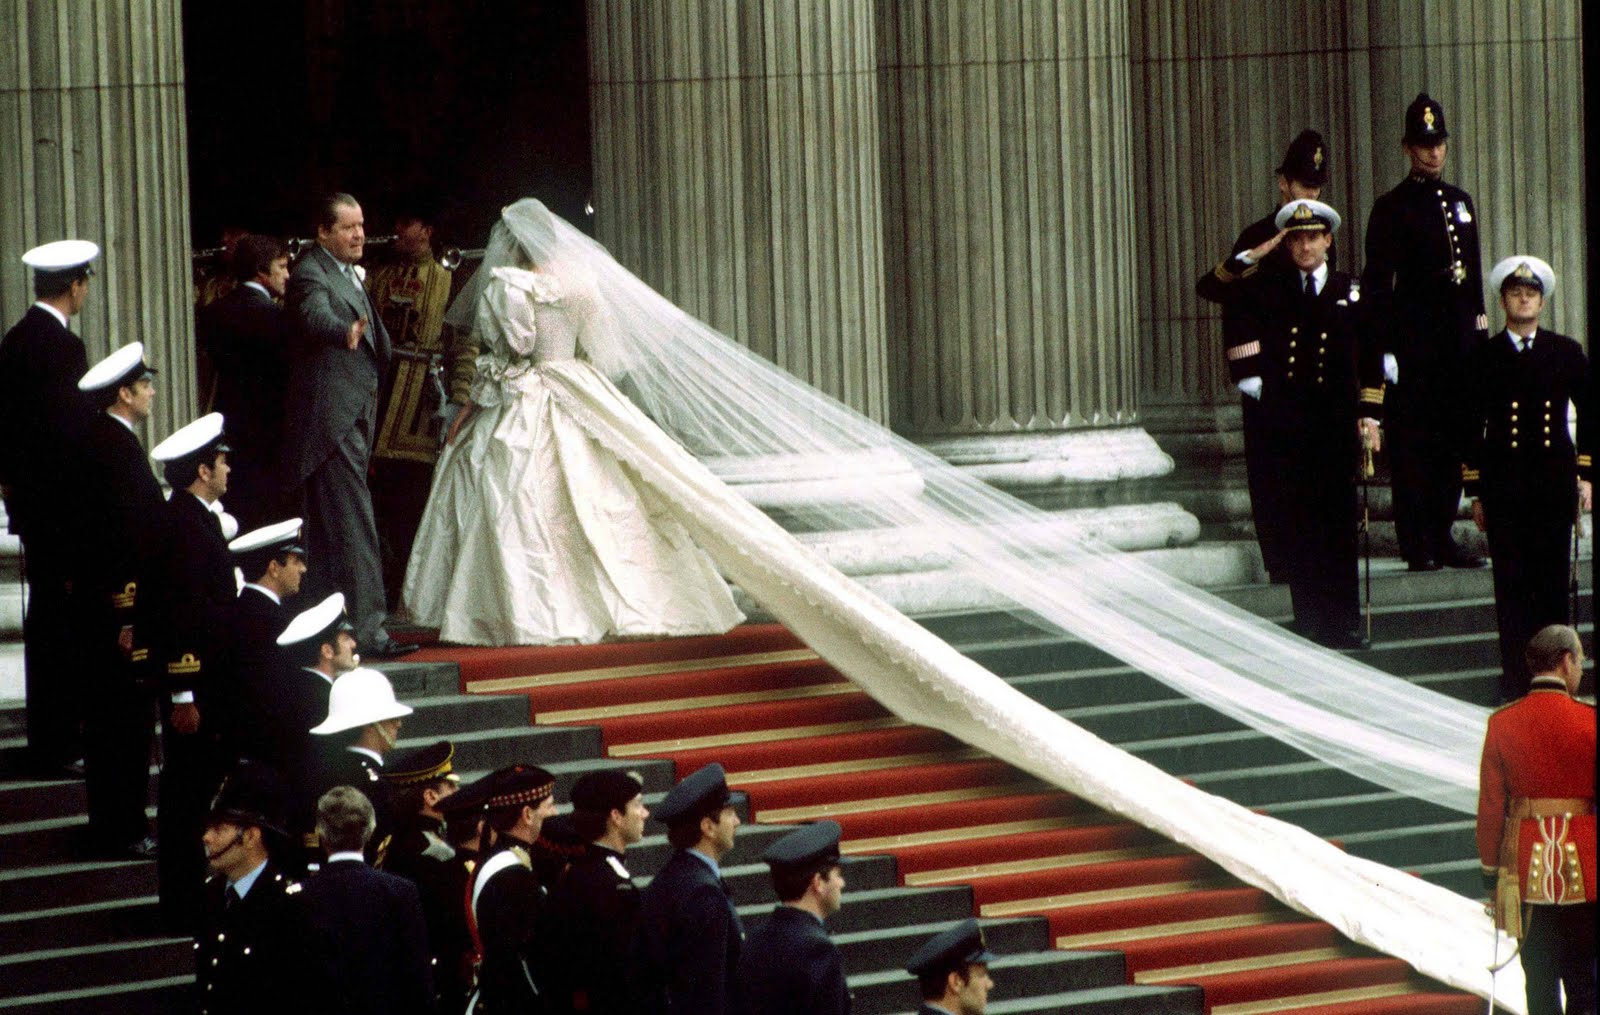 http://1.bp.blogspot.com/-I6hf_H6Dpn0/Tke9aSKgrrI/AAAAAAAADzY/Qz7t7kAhzGI/s1600/1981-Princess-Diana-Wedding-73399860.jpg